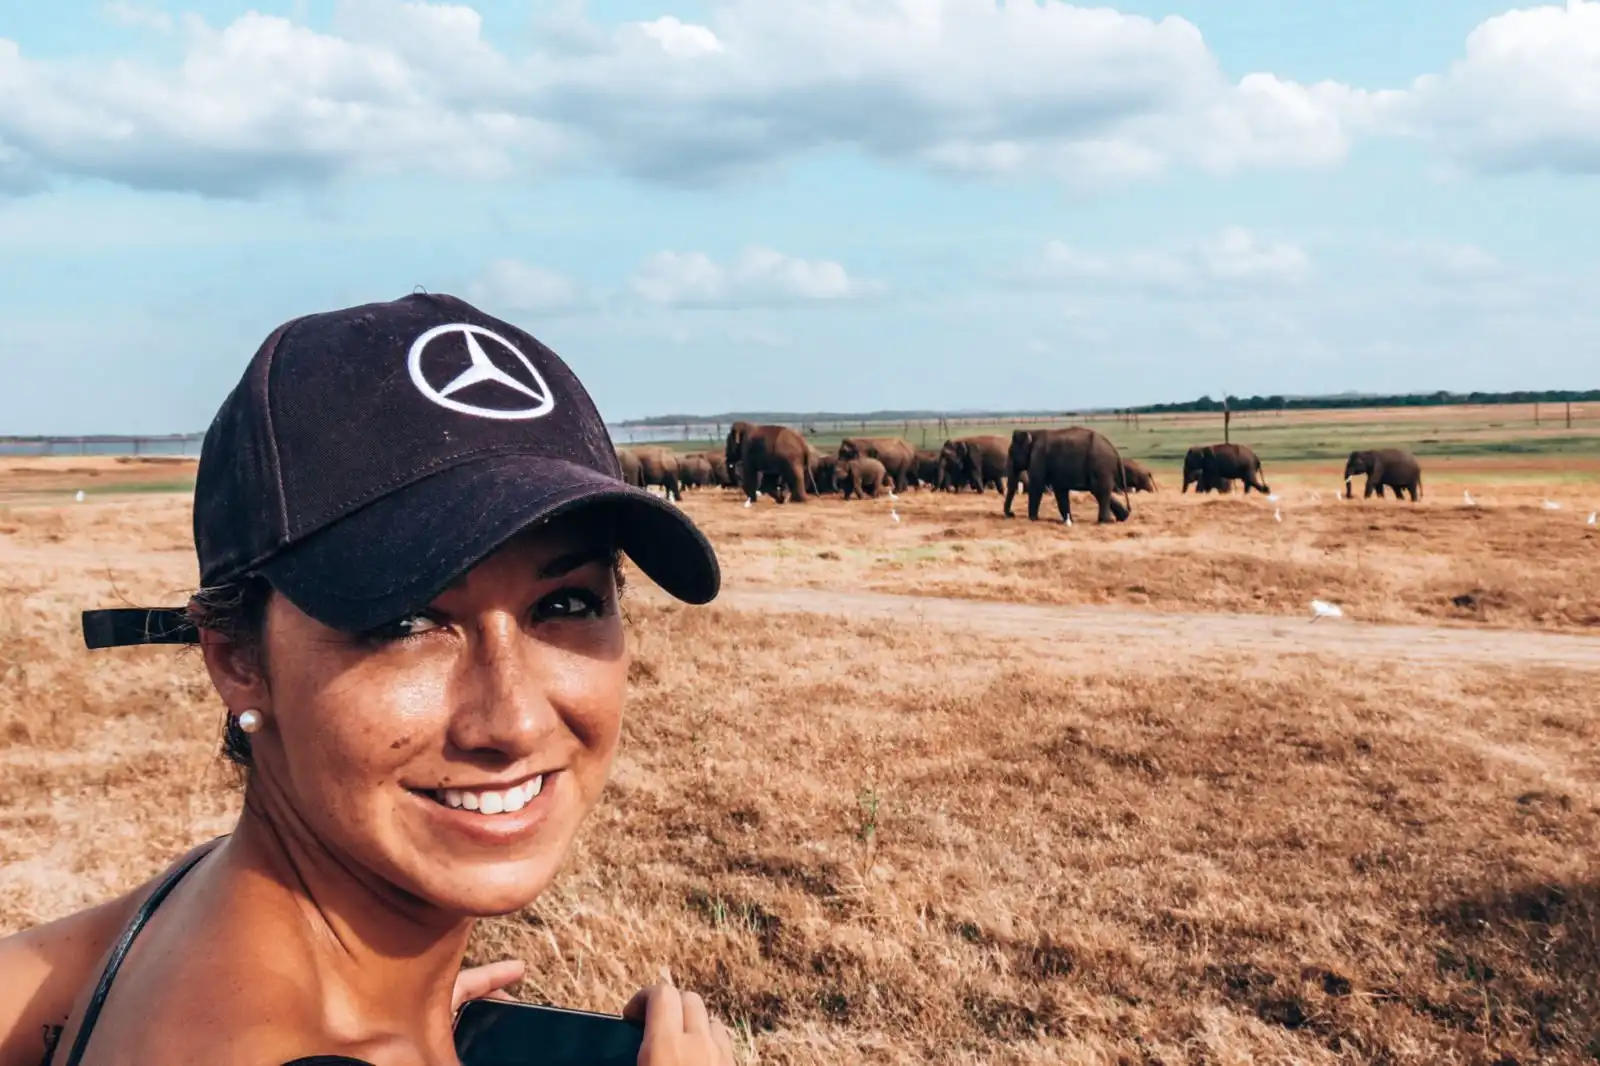 On safari with Elephants near Minneriya